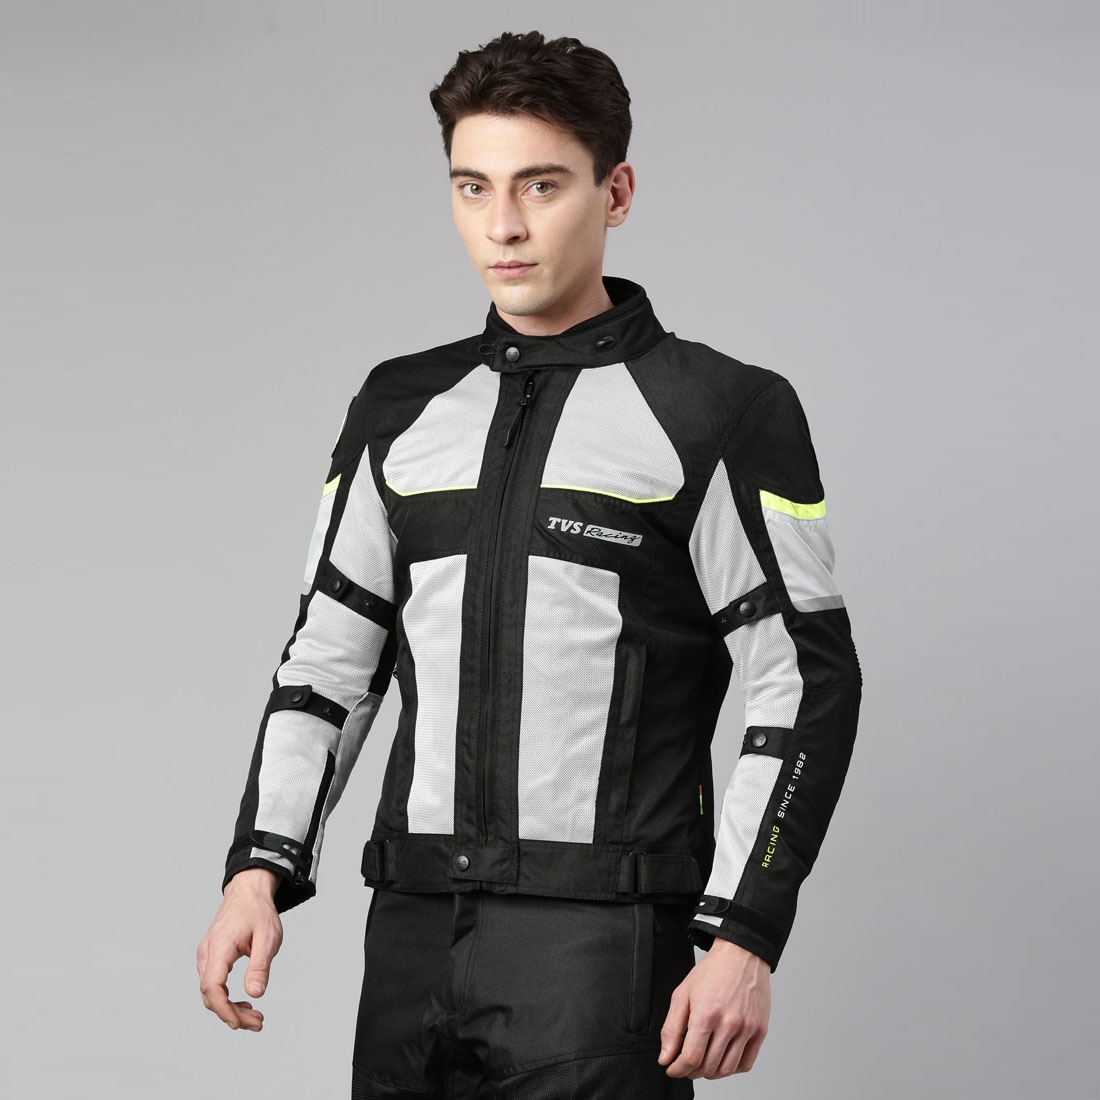 Buy TVS Racing Riding Jacket Online - Asphalt Grey